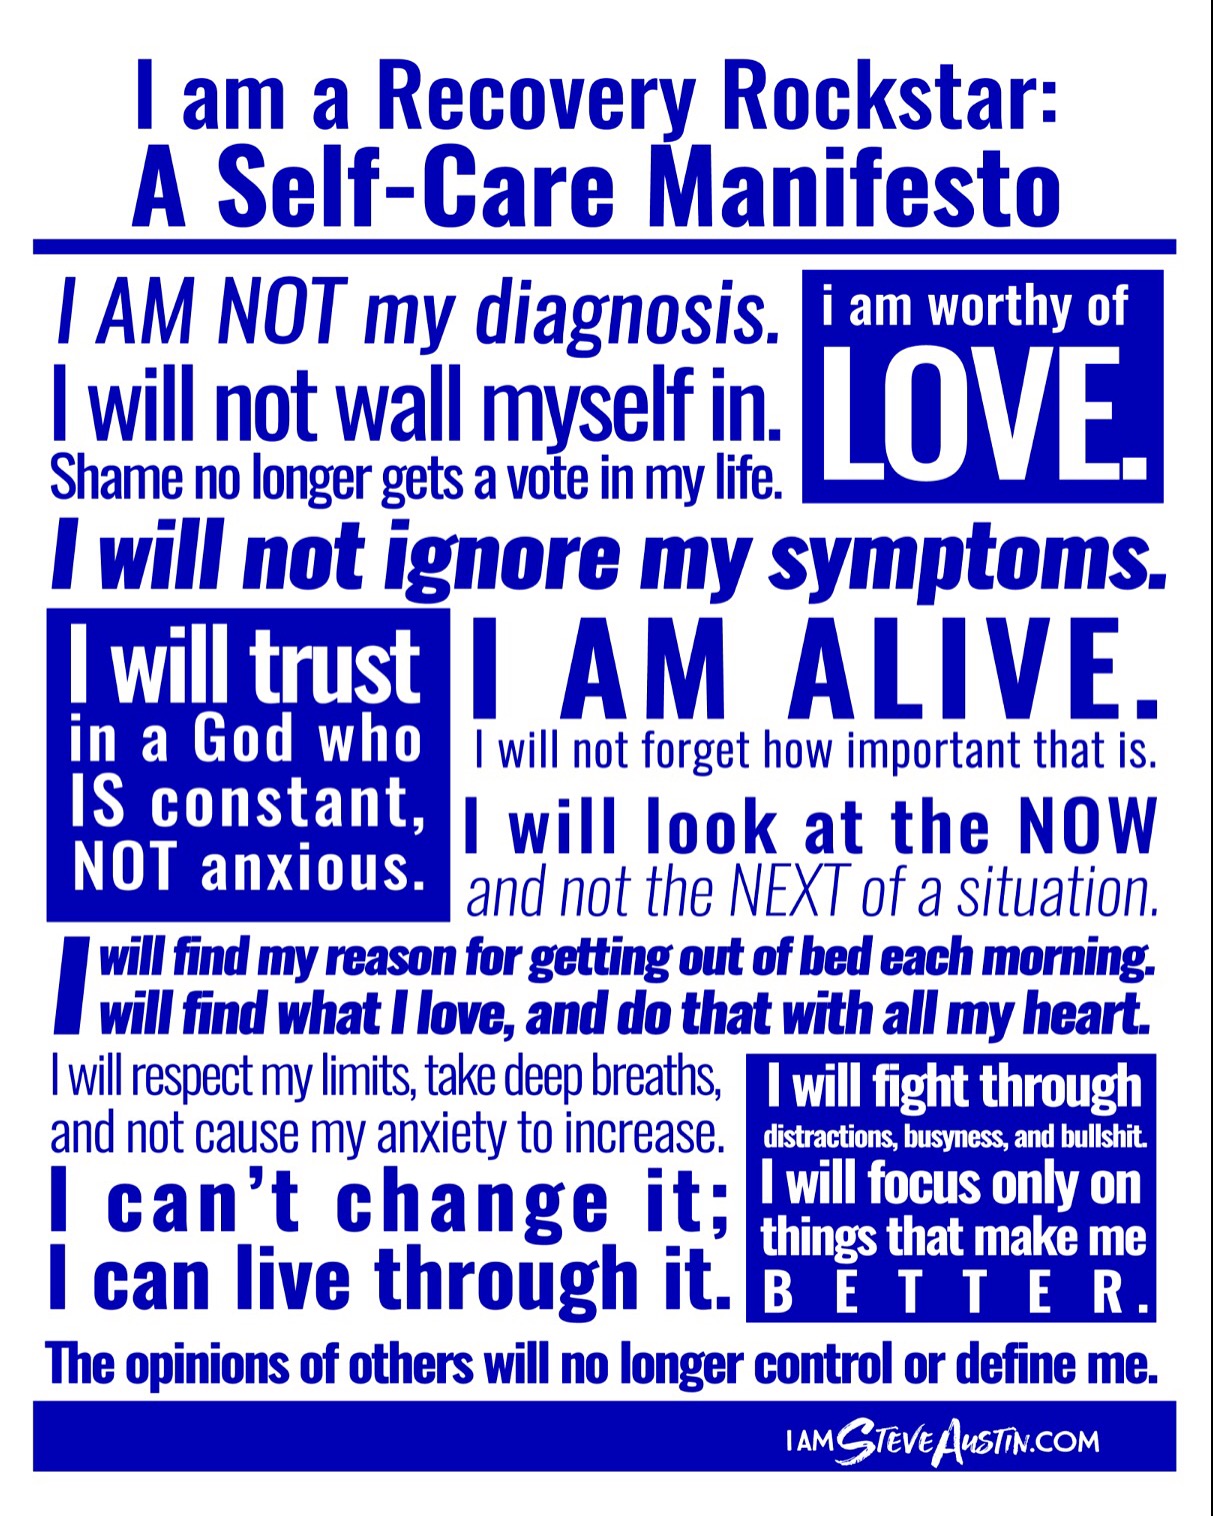 Steve Austin's Self-Care Manifesto